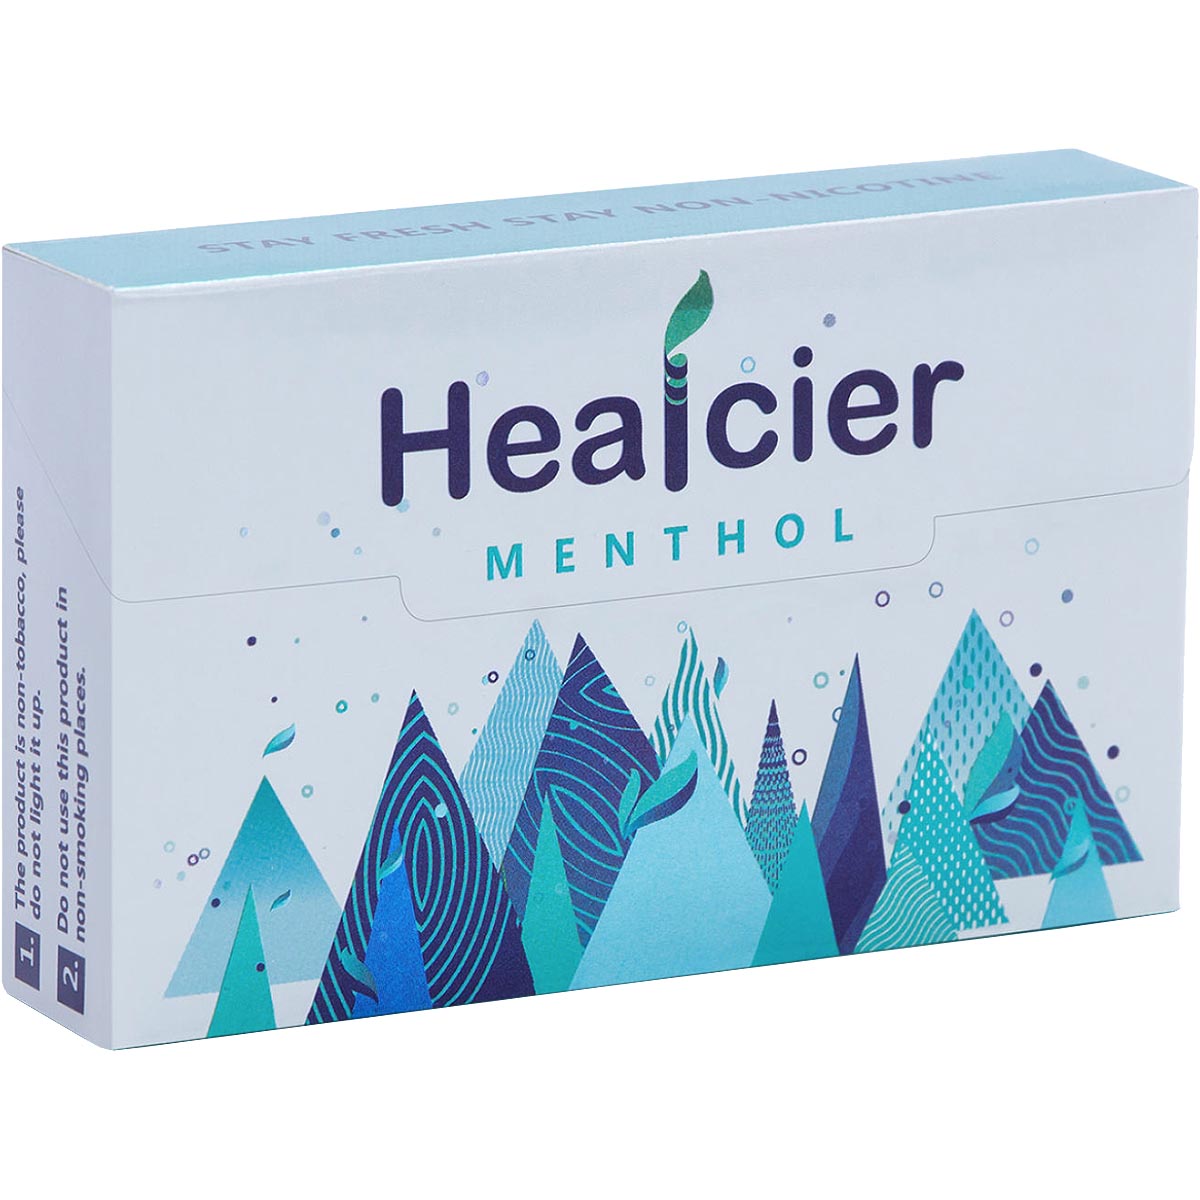 Healcier - Menthol Non-Nicotine (1 pack)